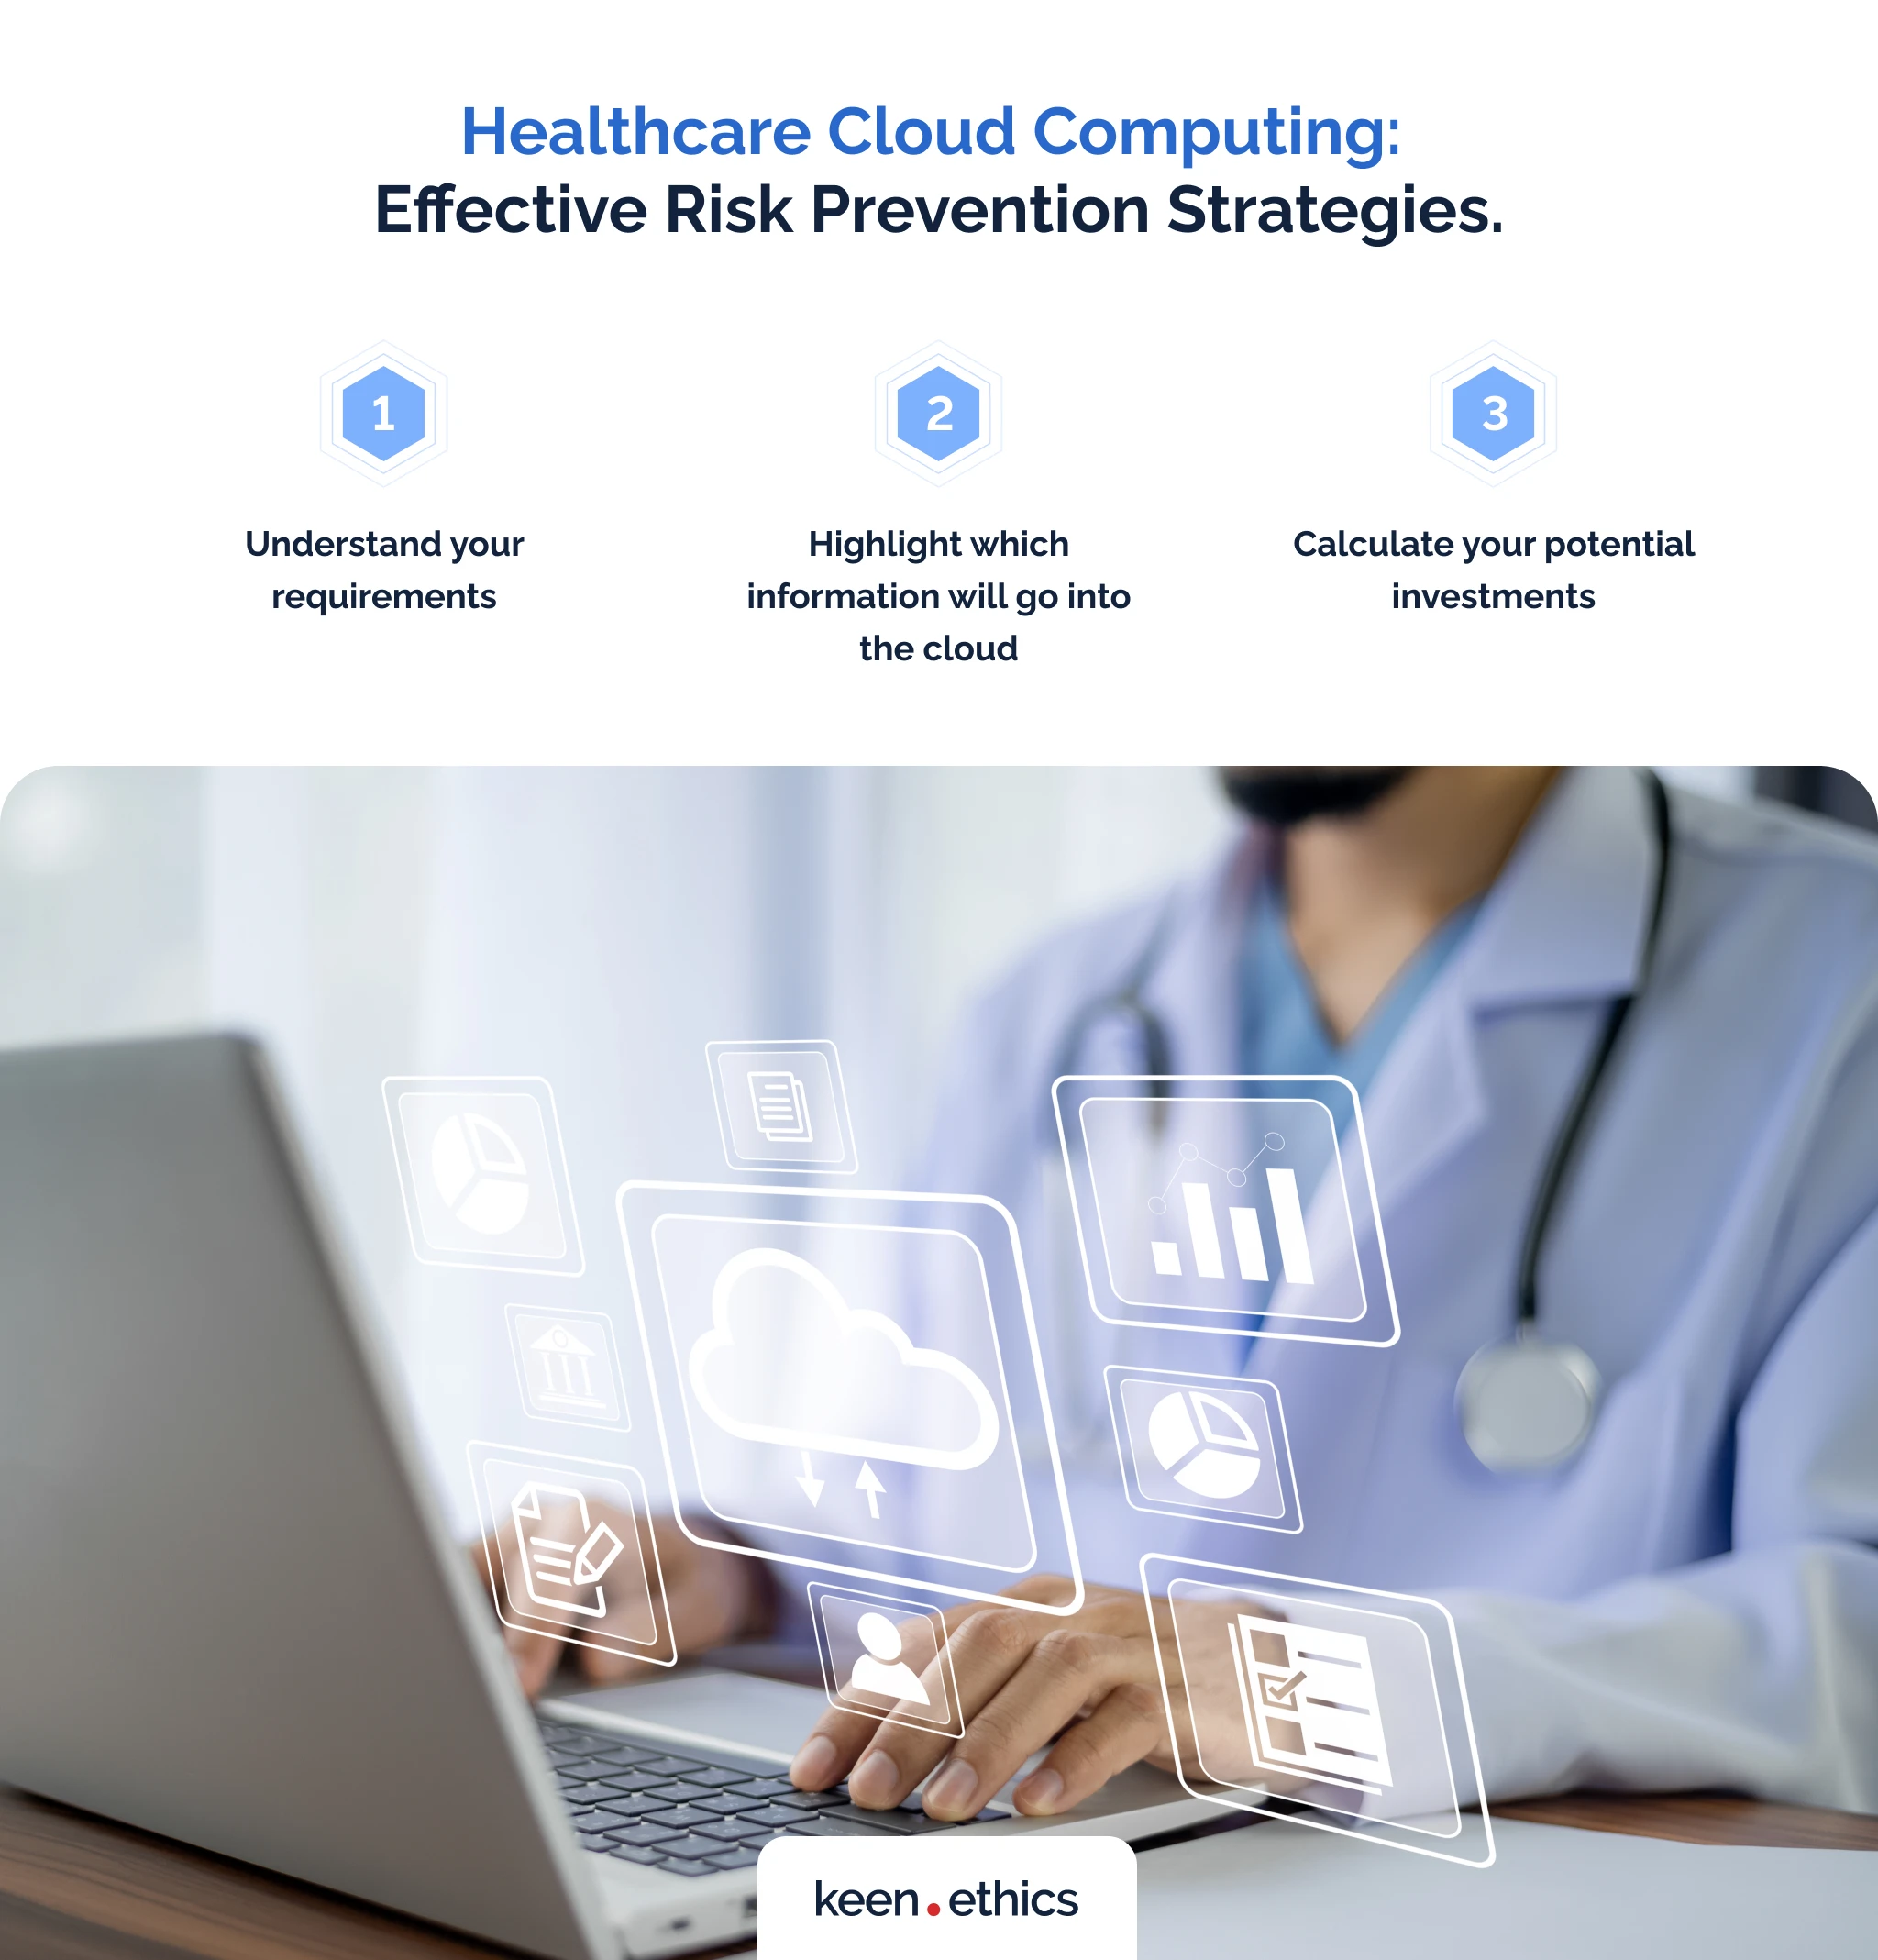 Healthcare cloud computing